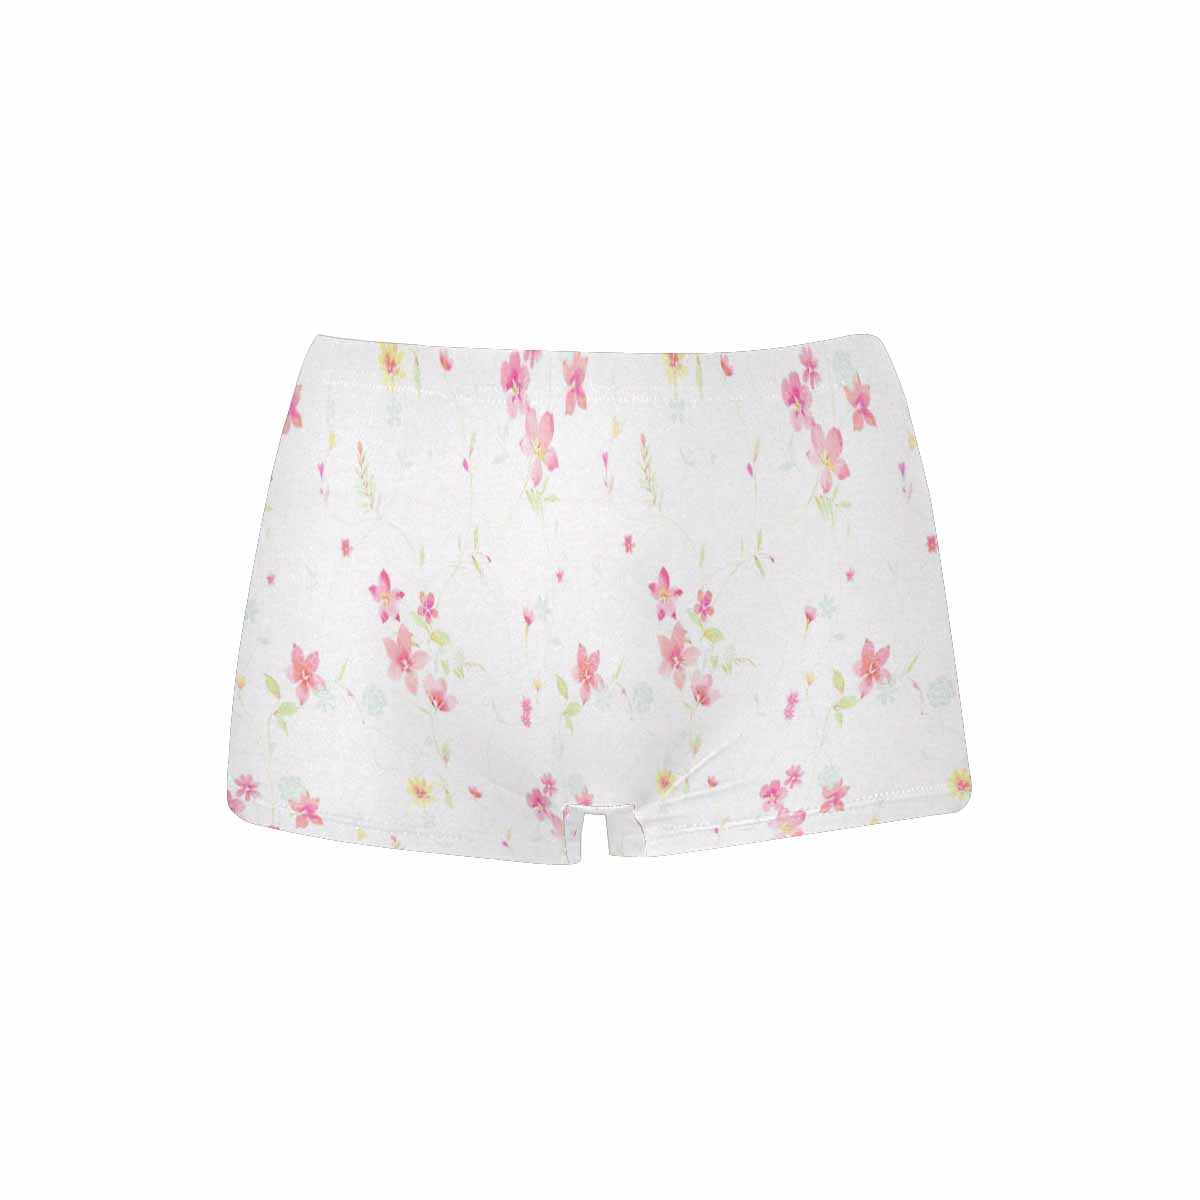 Floral 2, boyshorts, daisy dukes, pum pum shorts, panties, design 09